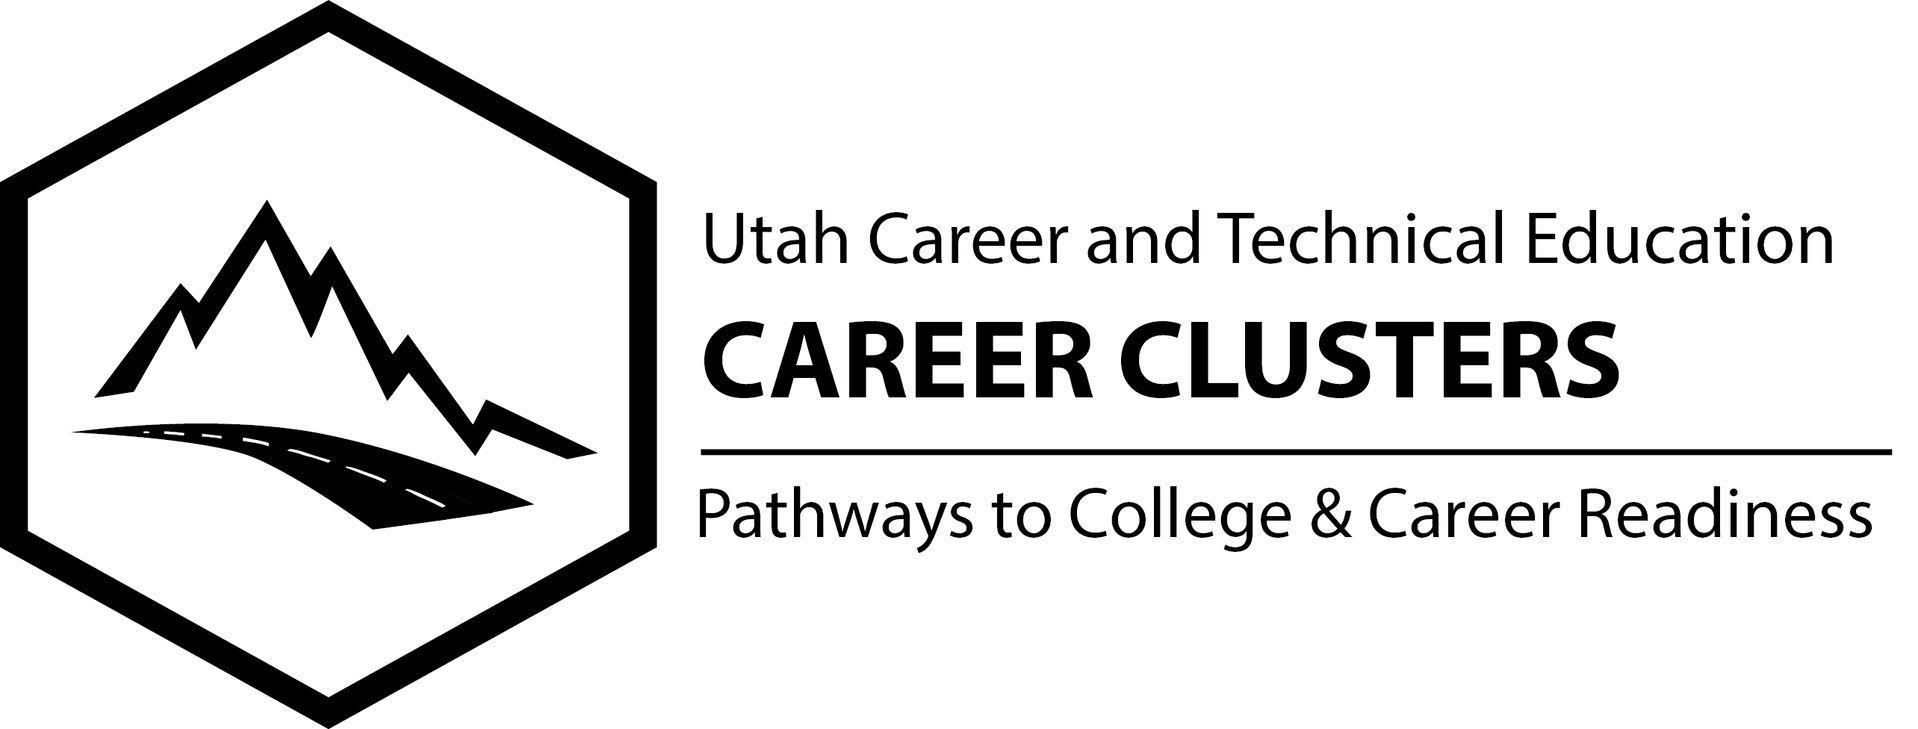 CTE career clusters logo